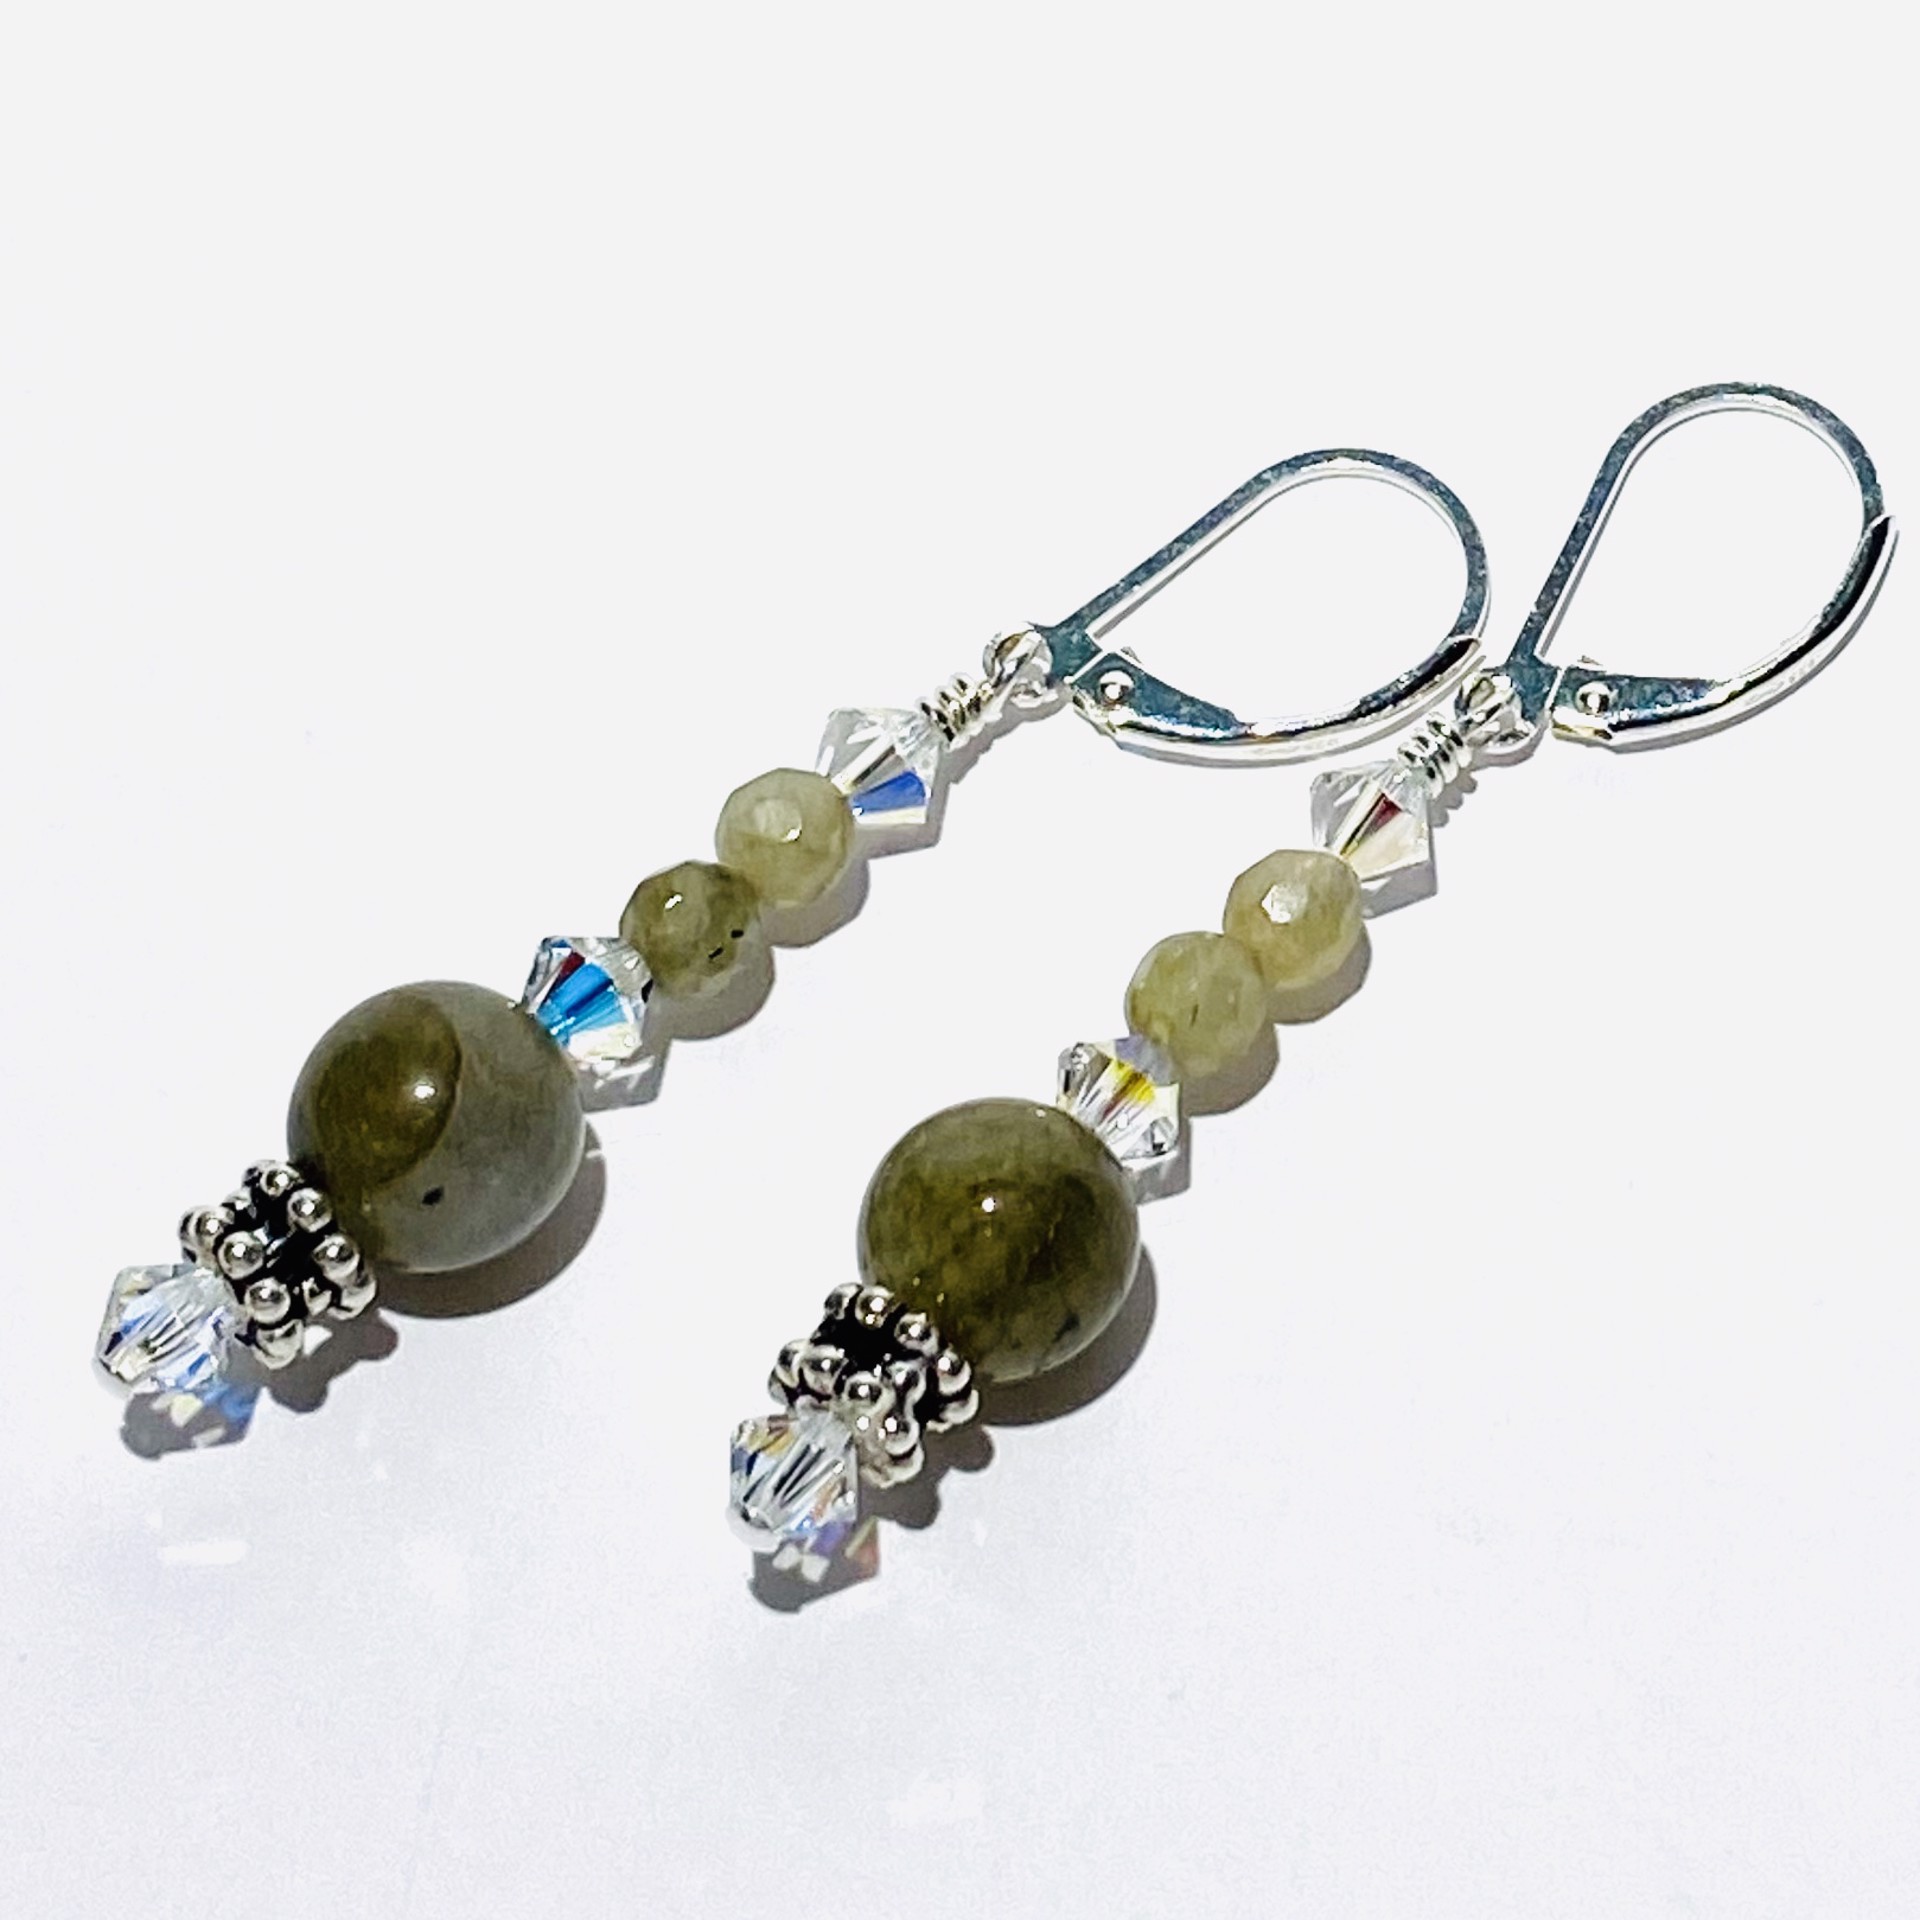 Labradorite Beads in Silver Earrings SHOSH20-69 by Shoshannah Weinisch